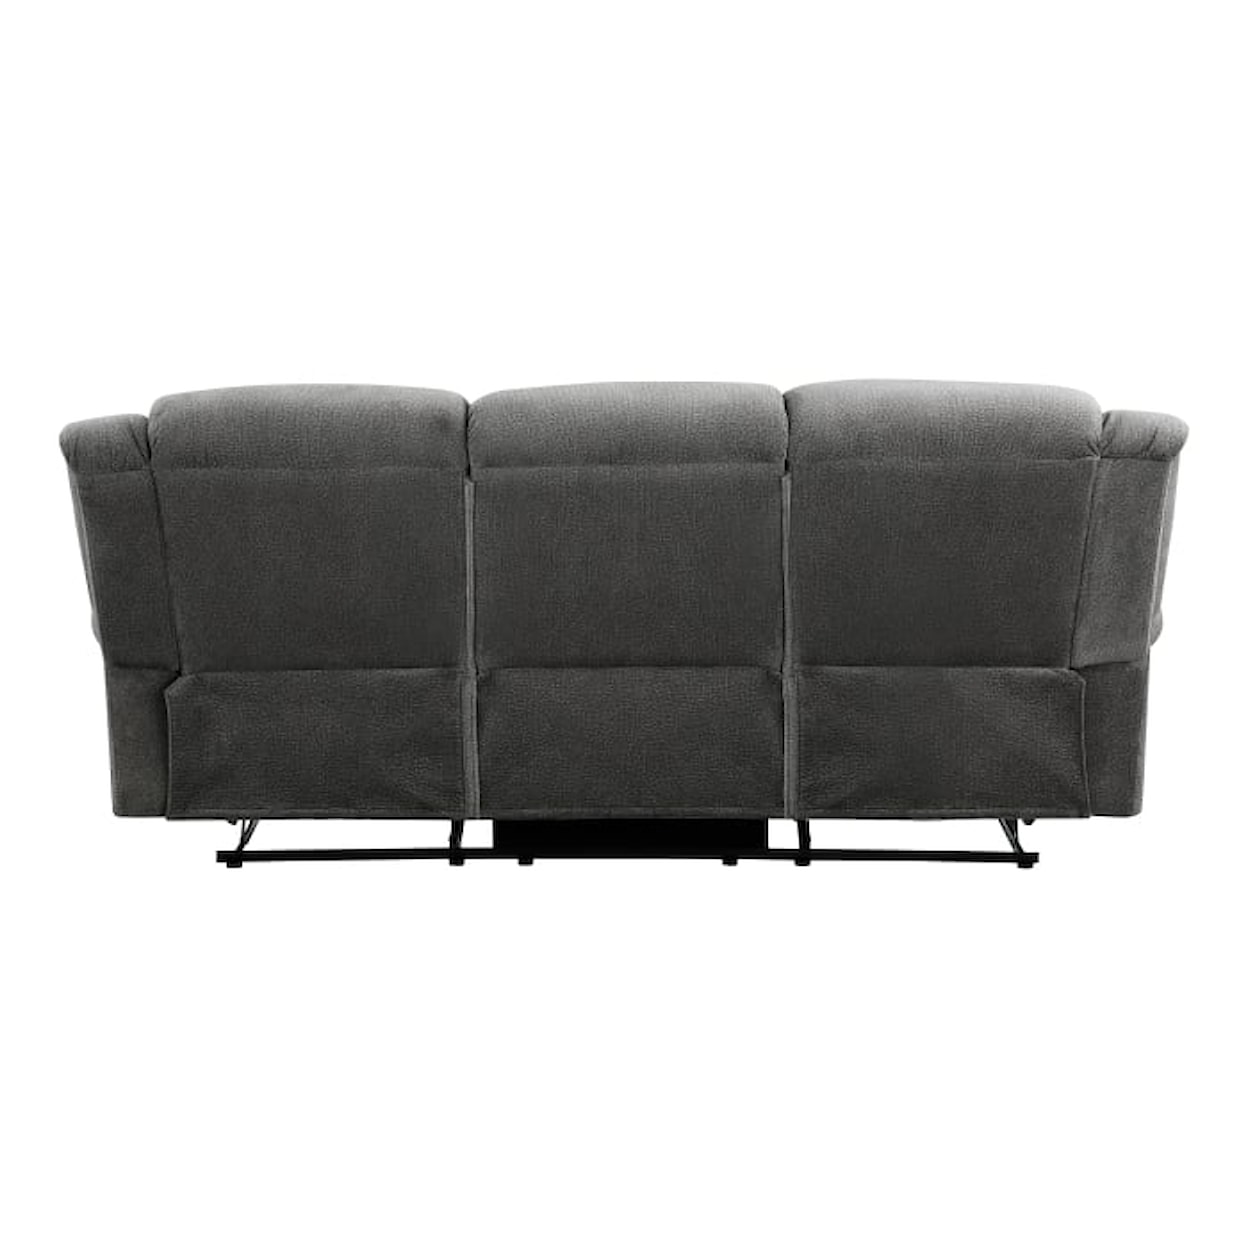 Homelegance Furniture Brennen Double Reclining Sofa